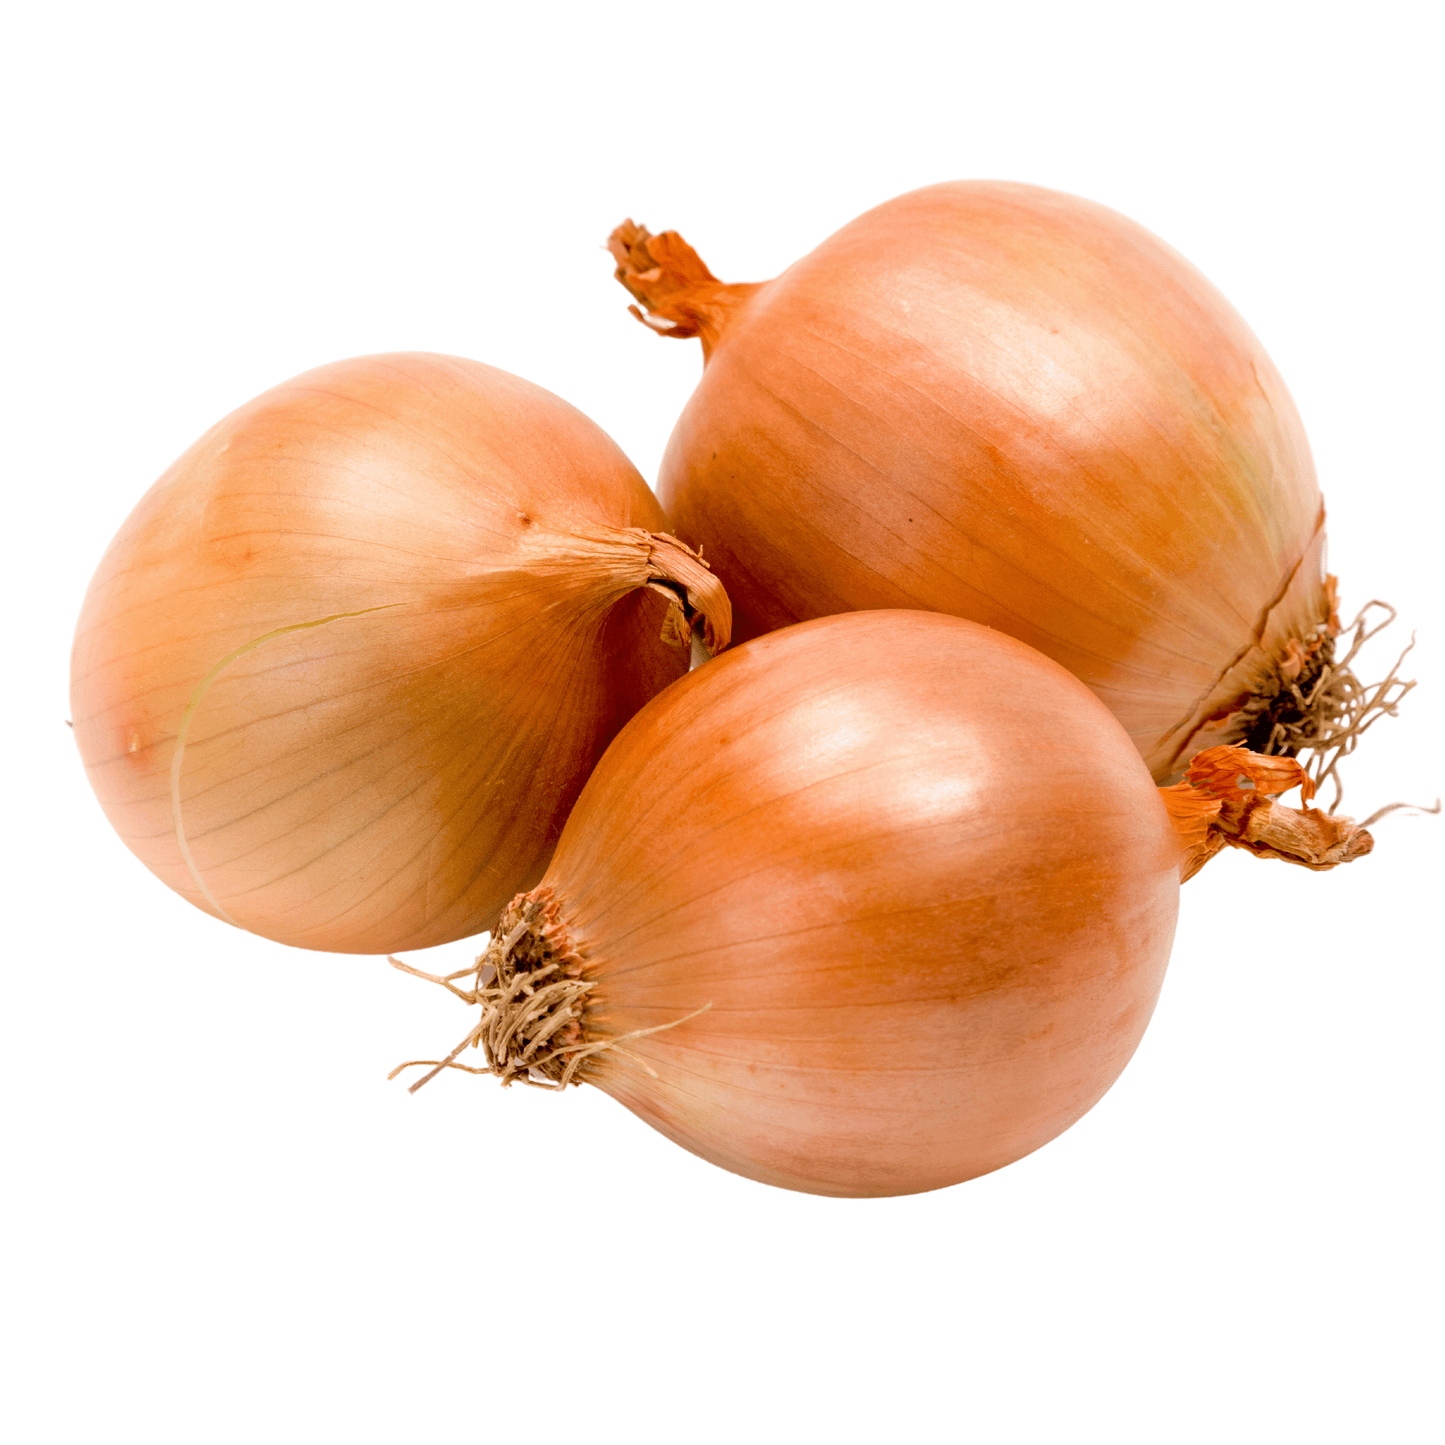 Yellow Onion-Texas Early Grano - Hasty Roots